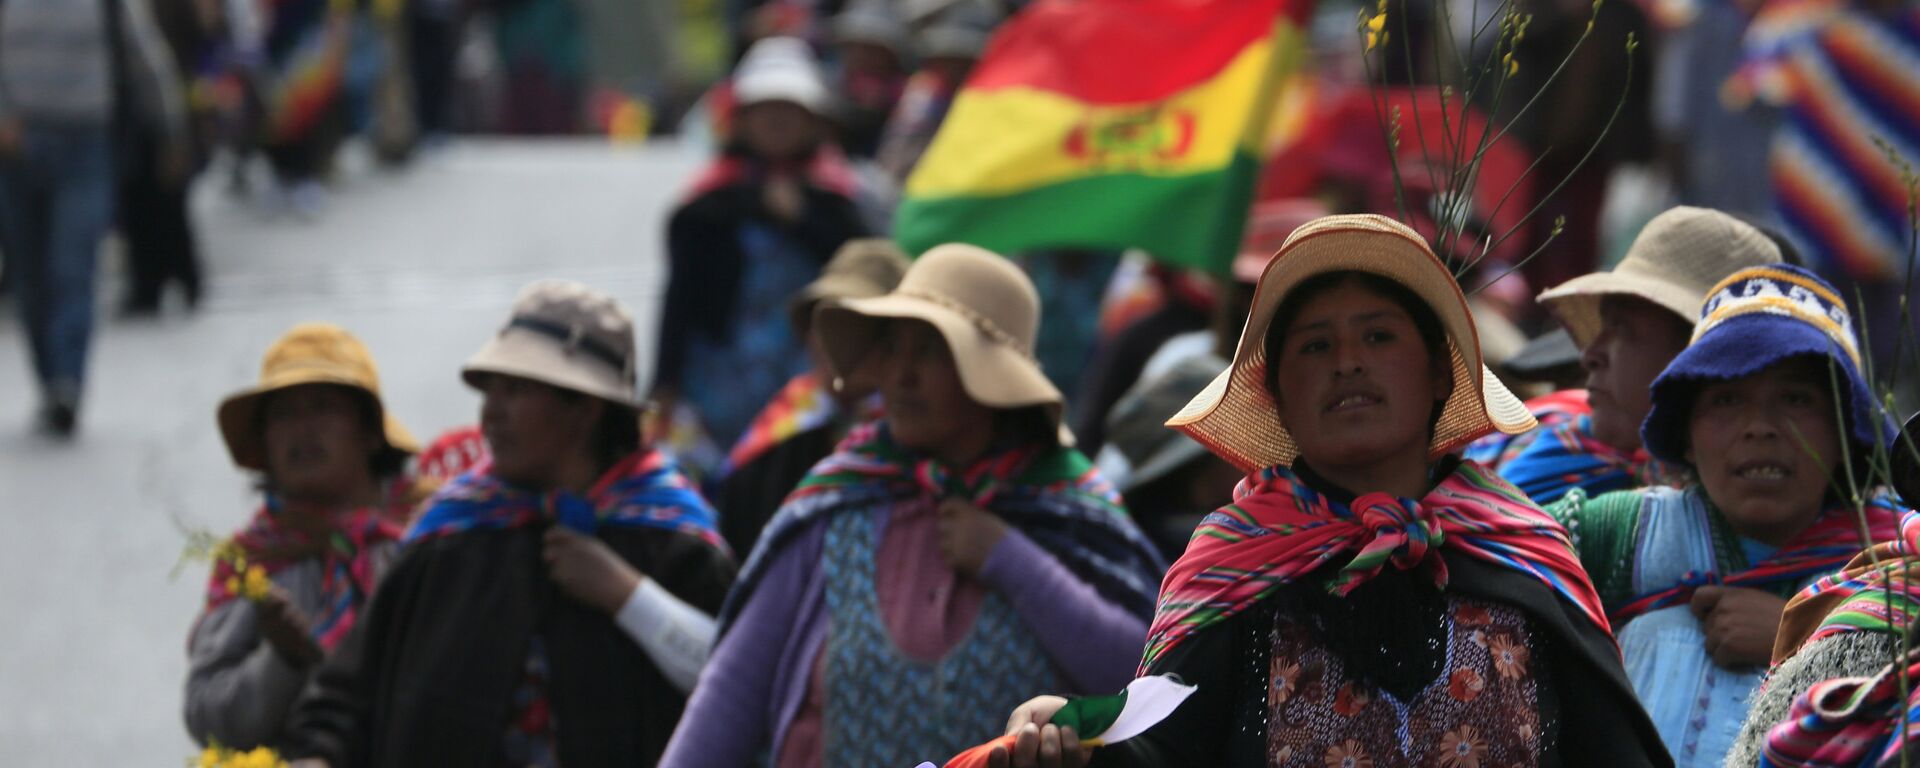 Mujeres indígenas en Bolivia - Sputnik Mundo, 1920, 30.09.2021